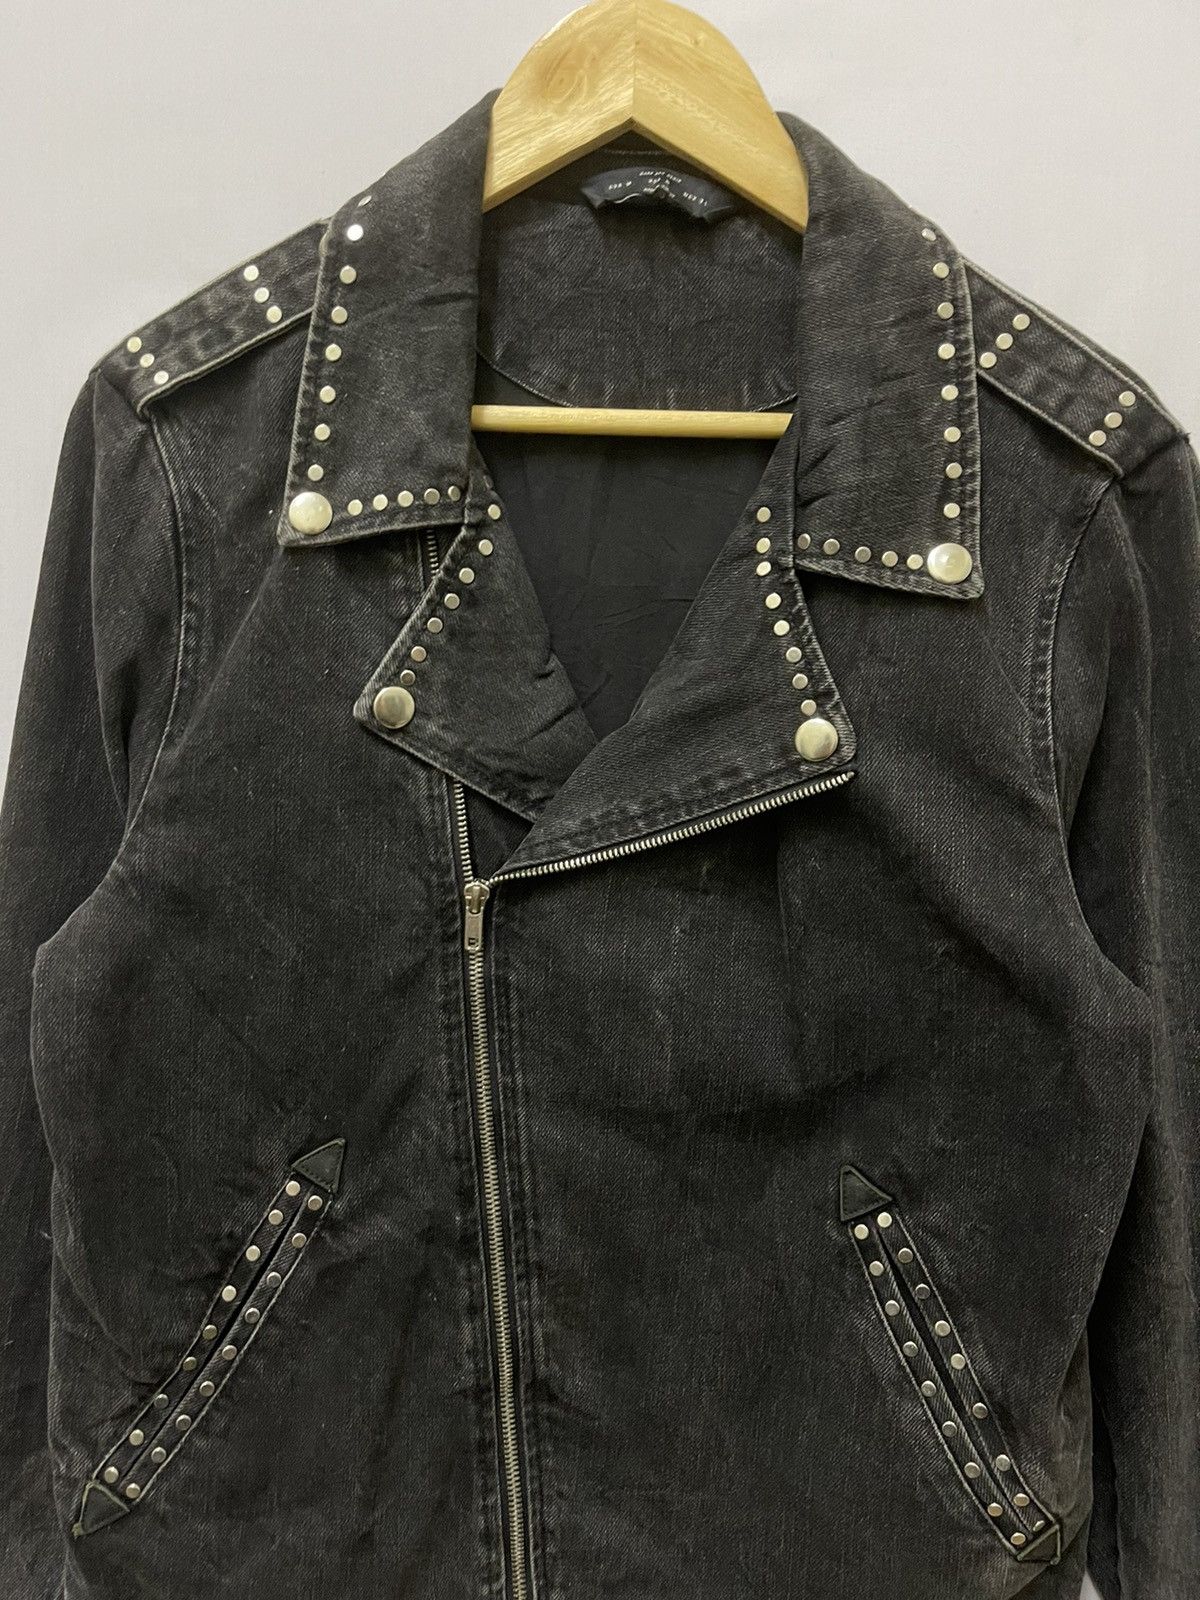 Zara Zara Man Denim Jacket Black Medium Size US M / EU 48-50 / 2 - 2 Preview